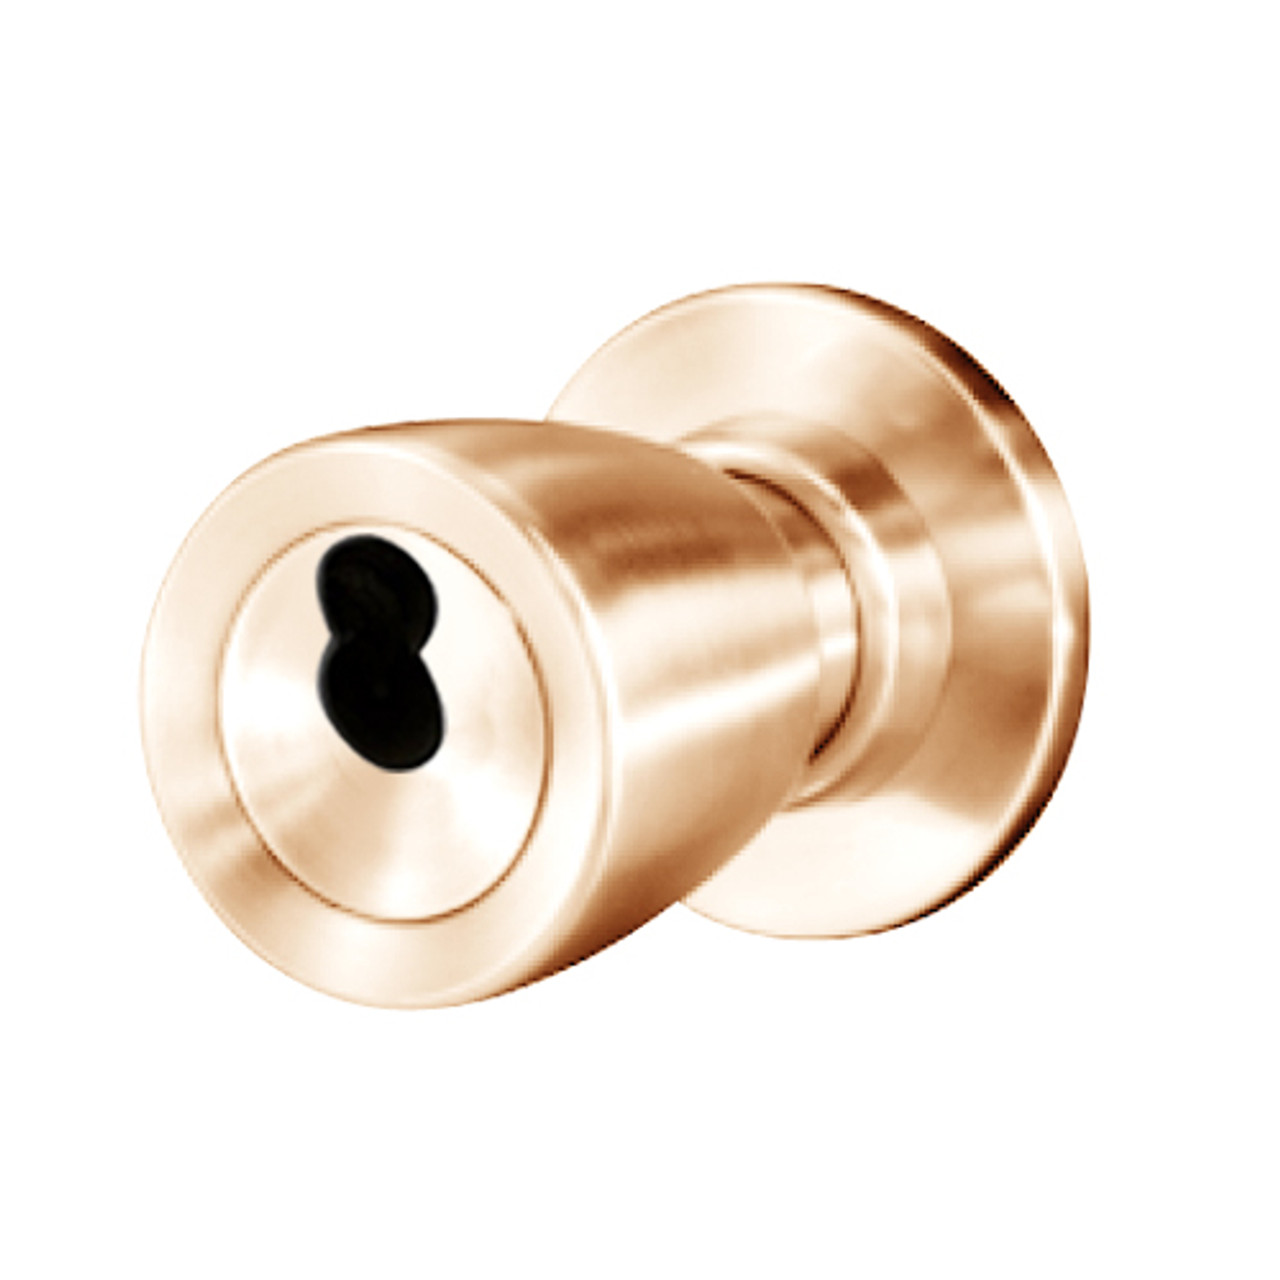 8K47S6CS3611 Best 8K Series Communicating Heavy Duty Cylindrical Knob Locks with Tulip Style in Bright Bronze